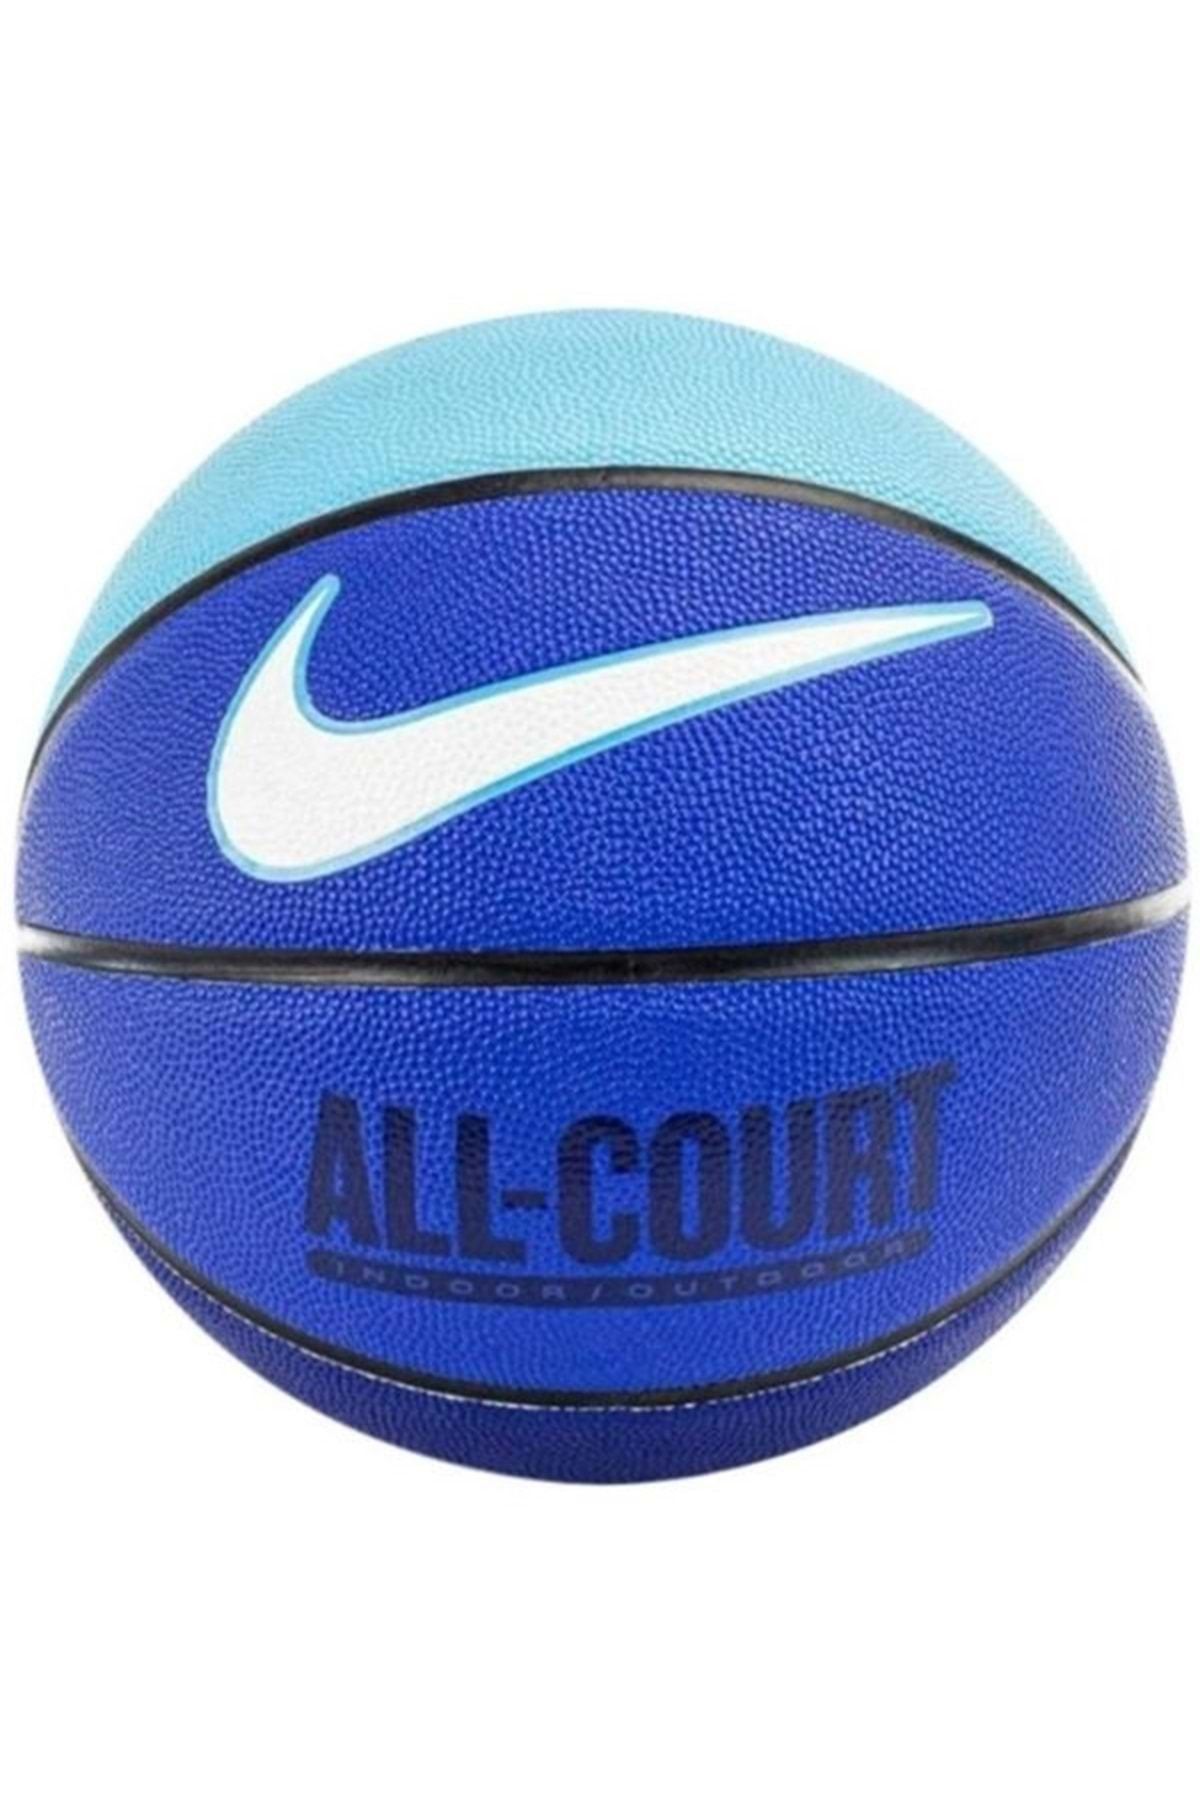 Nike Everyday All-court Unisex Basketbol Topu Mavi